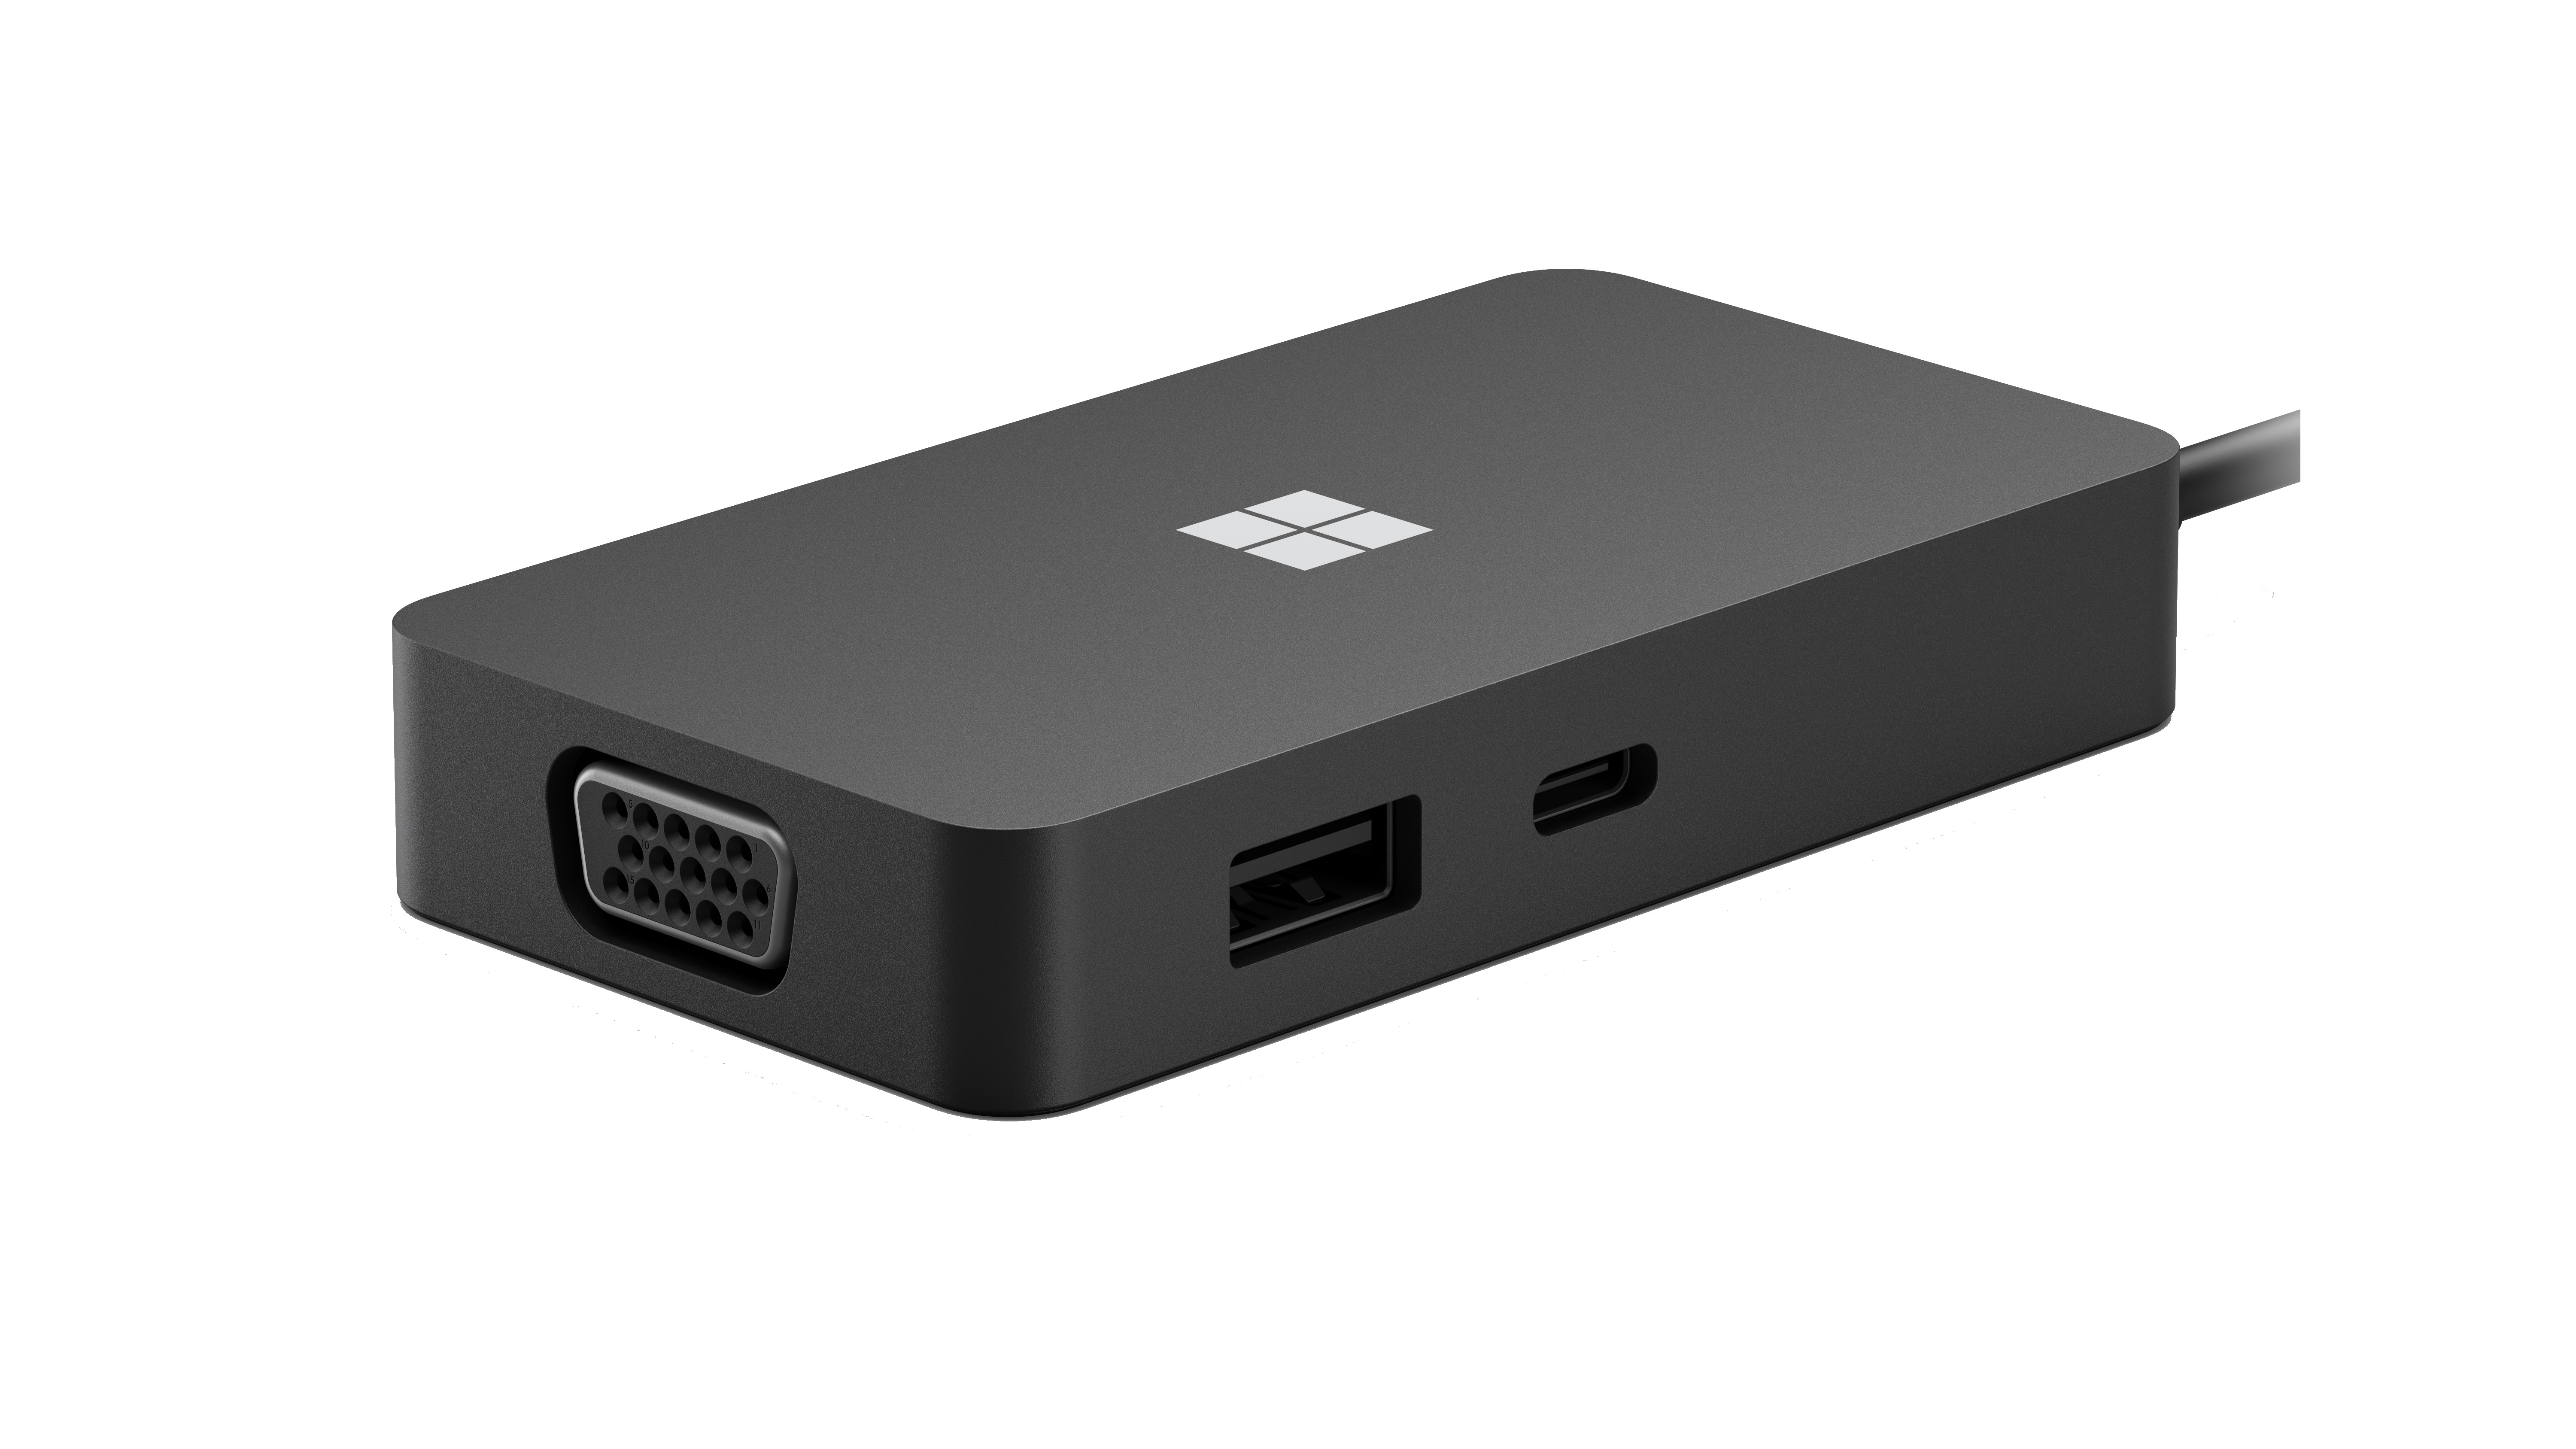 Microsoft USB-C Travel Hub Black